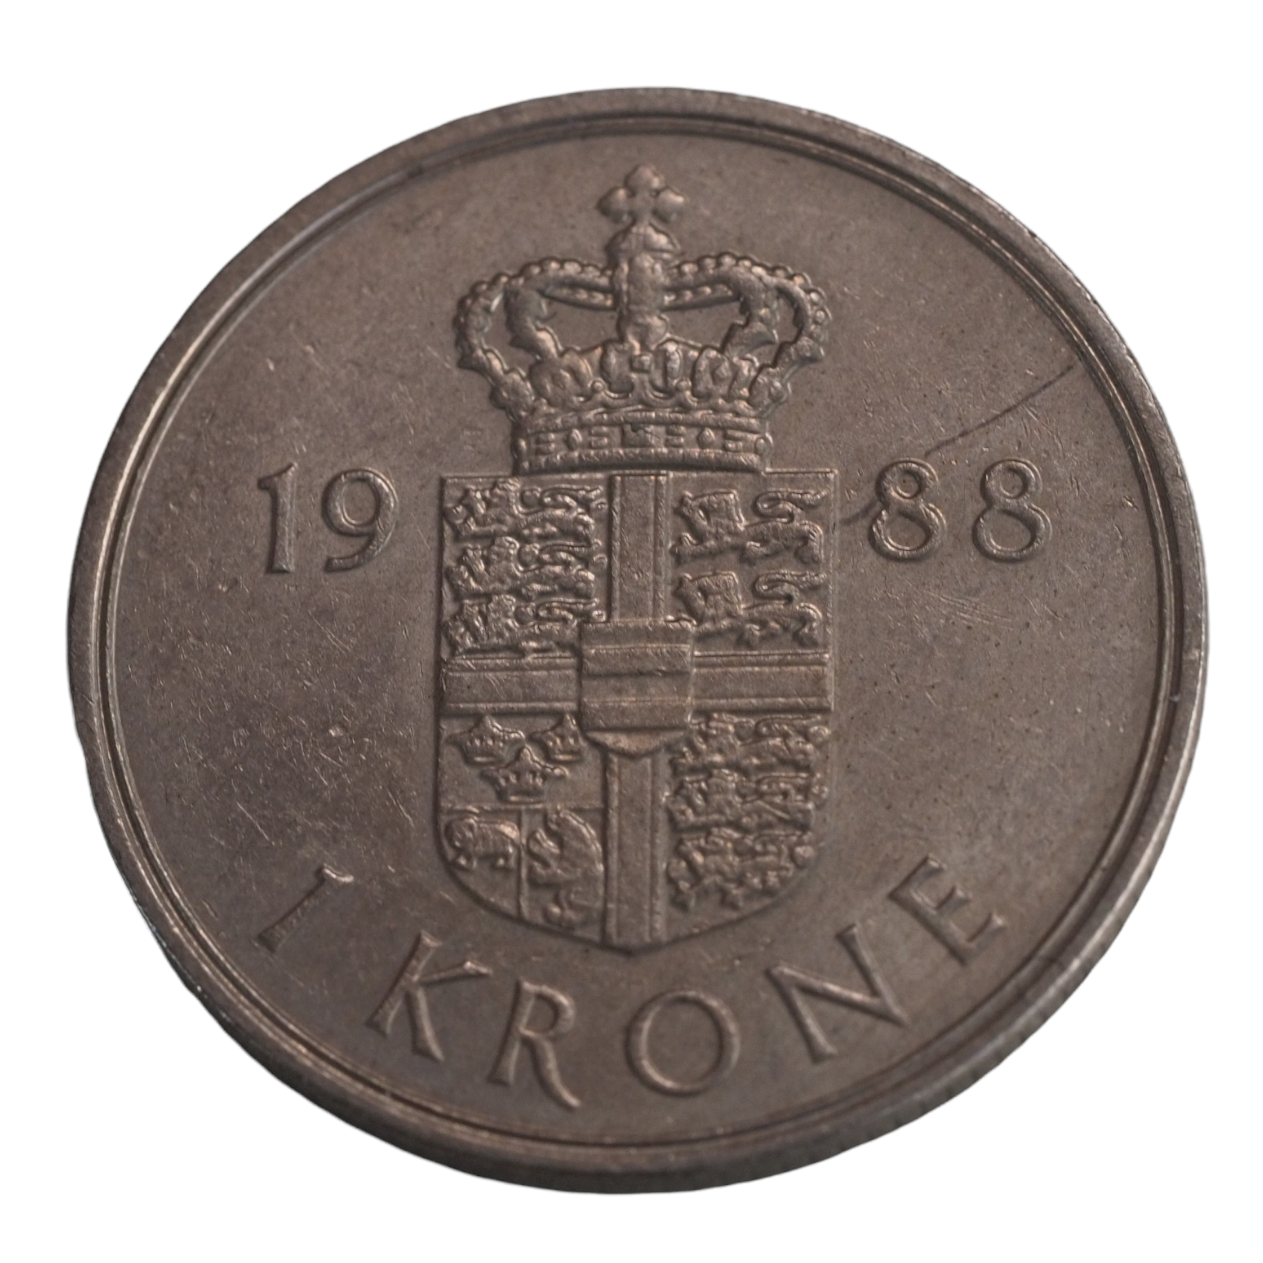 1 Krone  Margrethe II Danmarks  1988 Coin